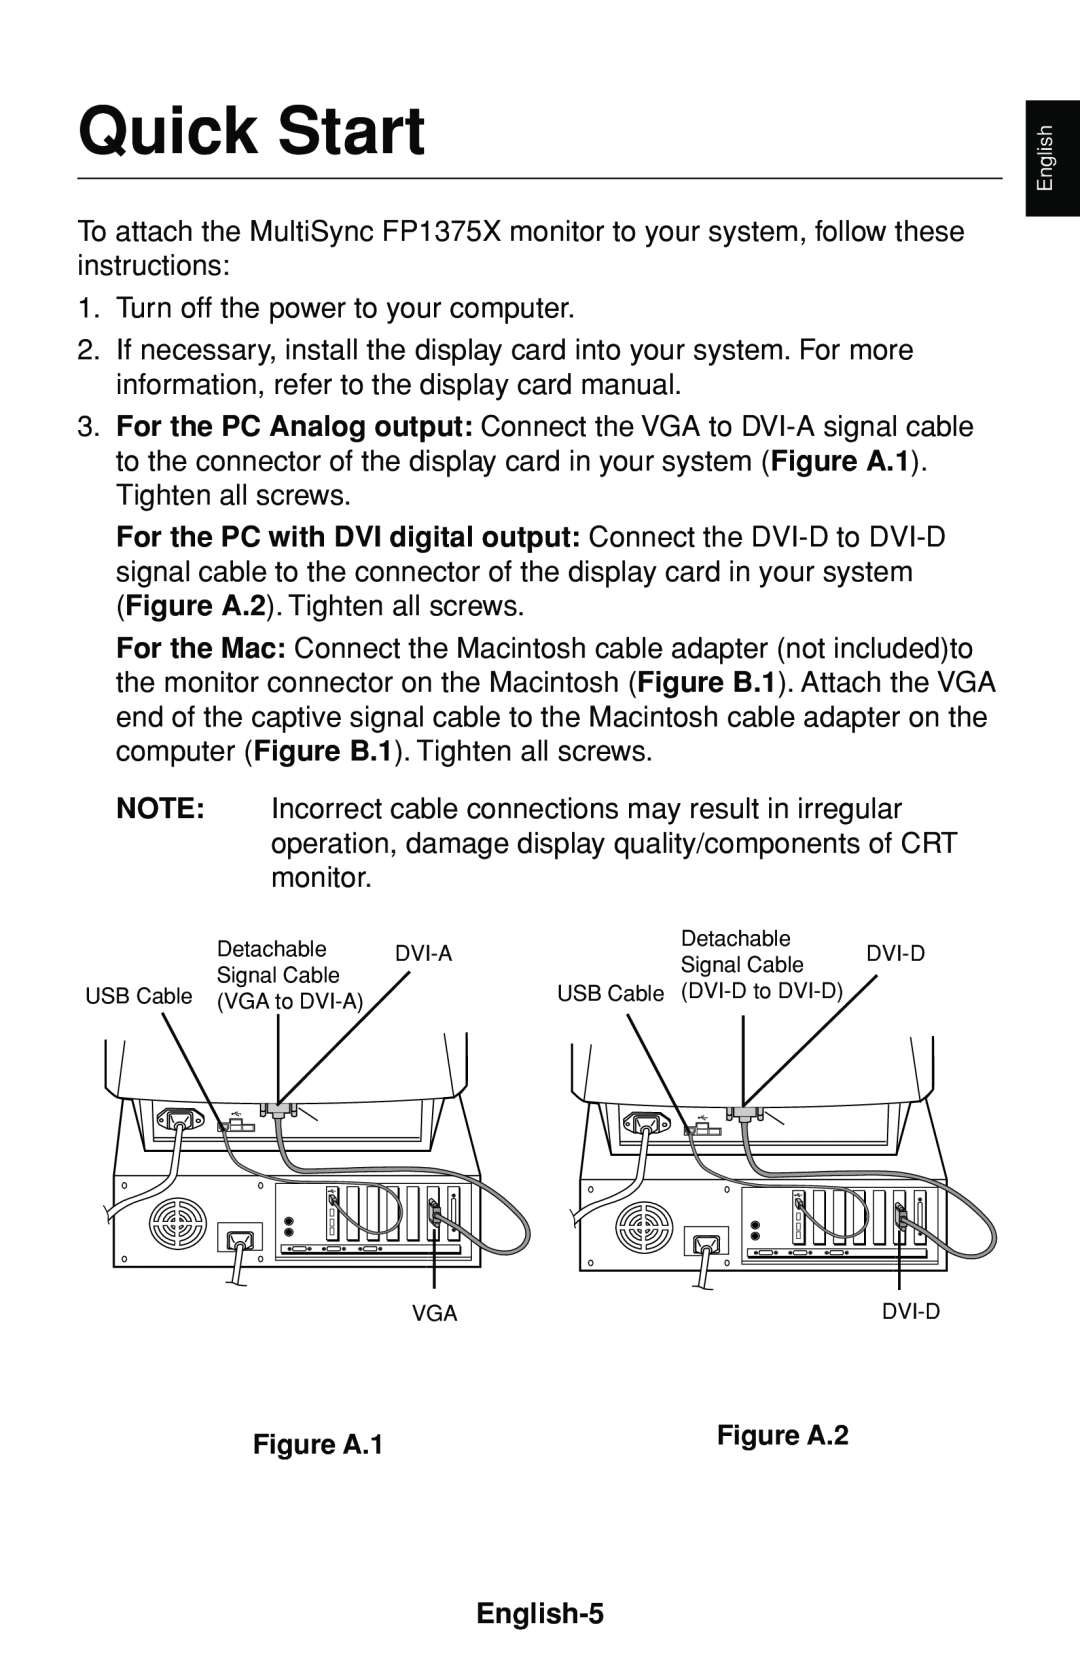 NEC FP1375X user manual Quick Start, English-5 